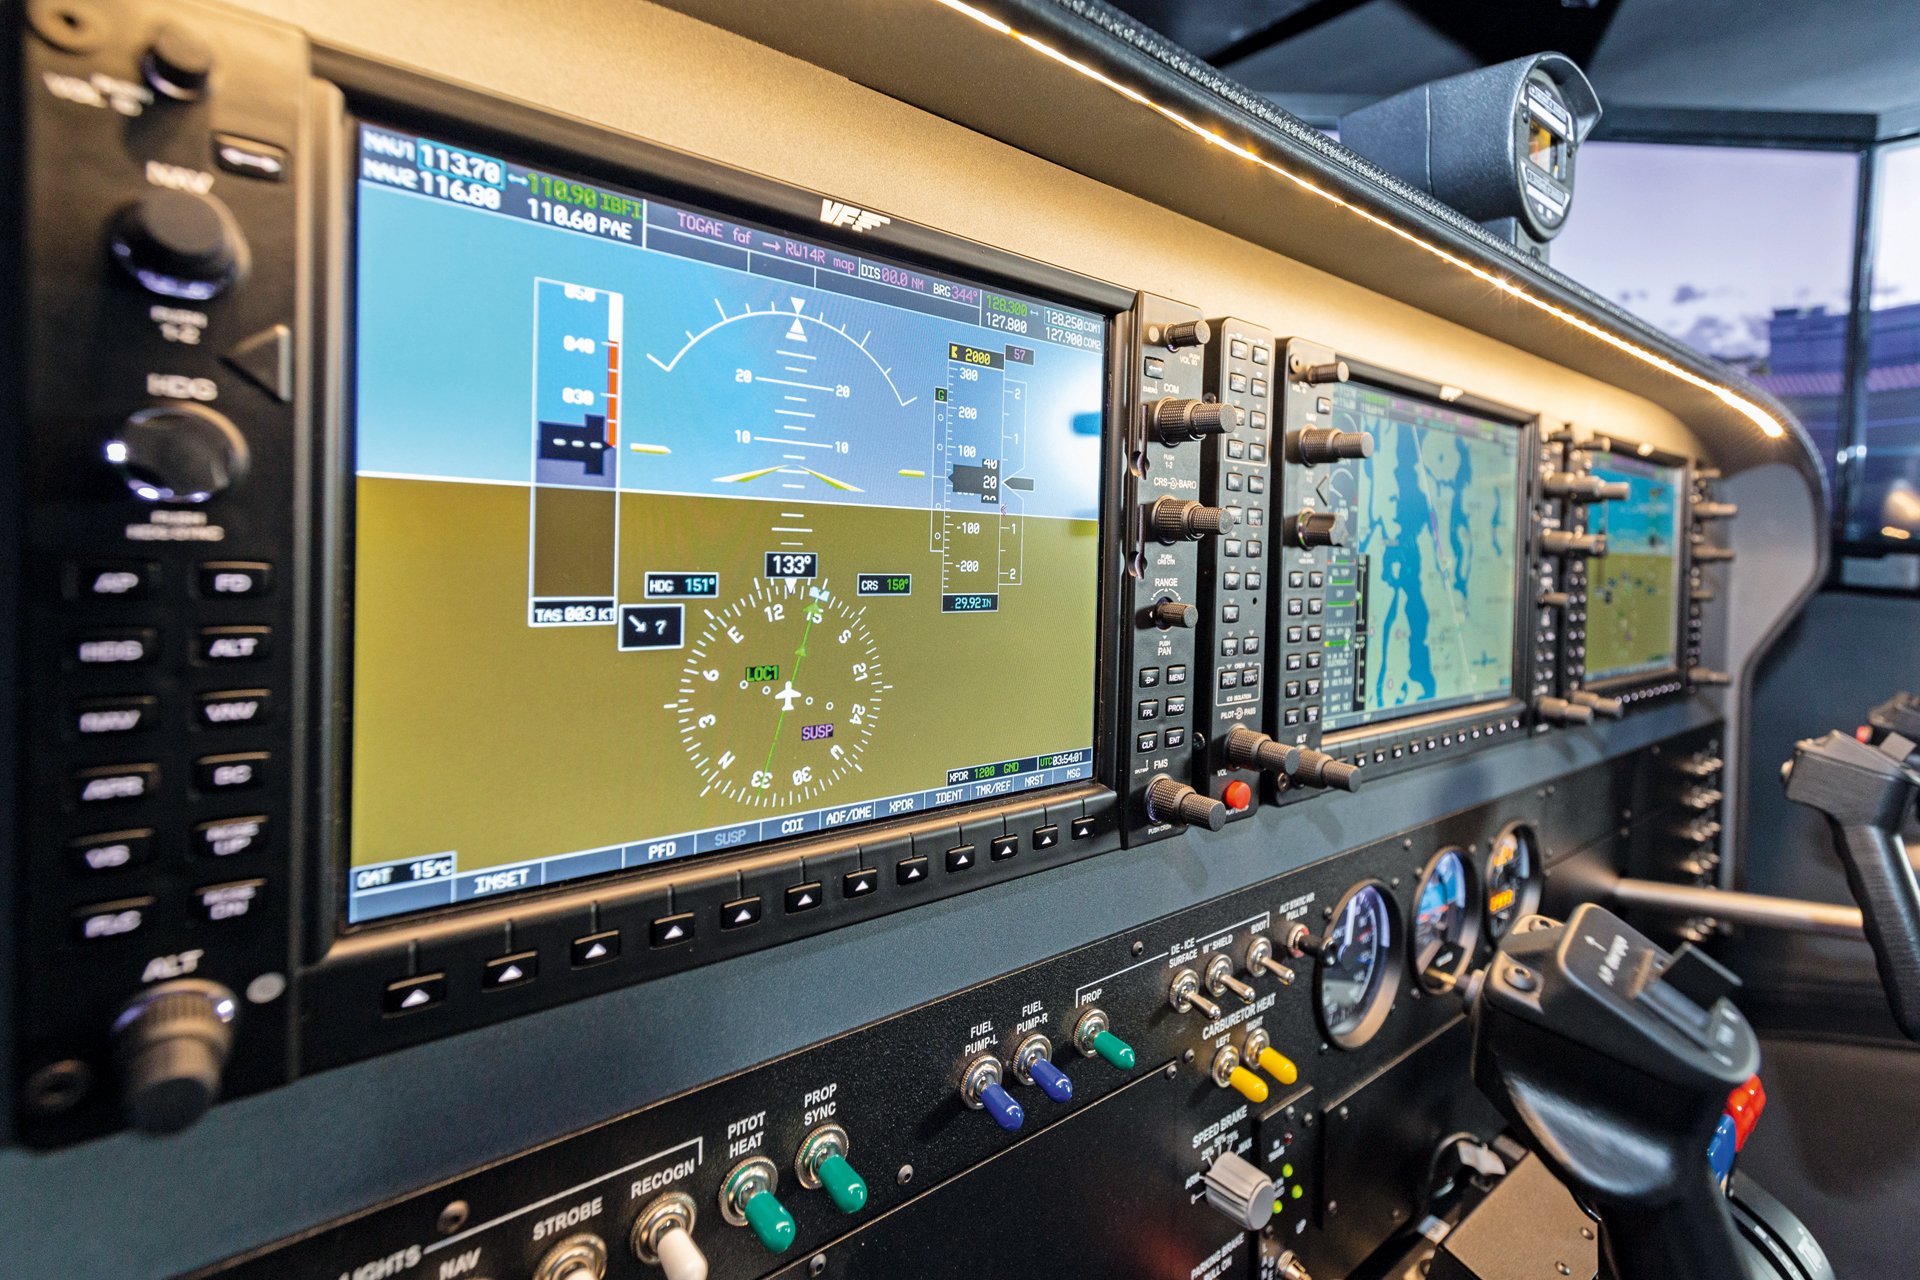 Solo Pro G1 FAA Approved Simulator